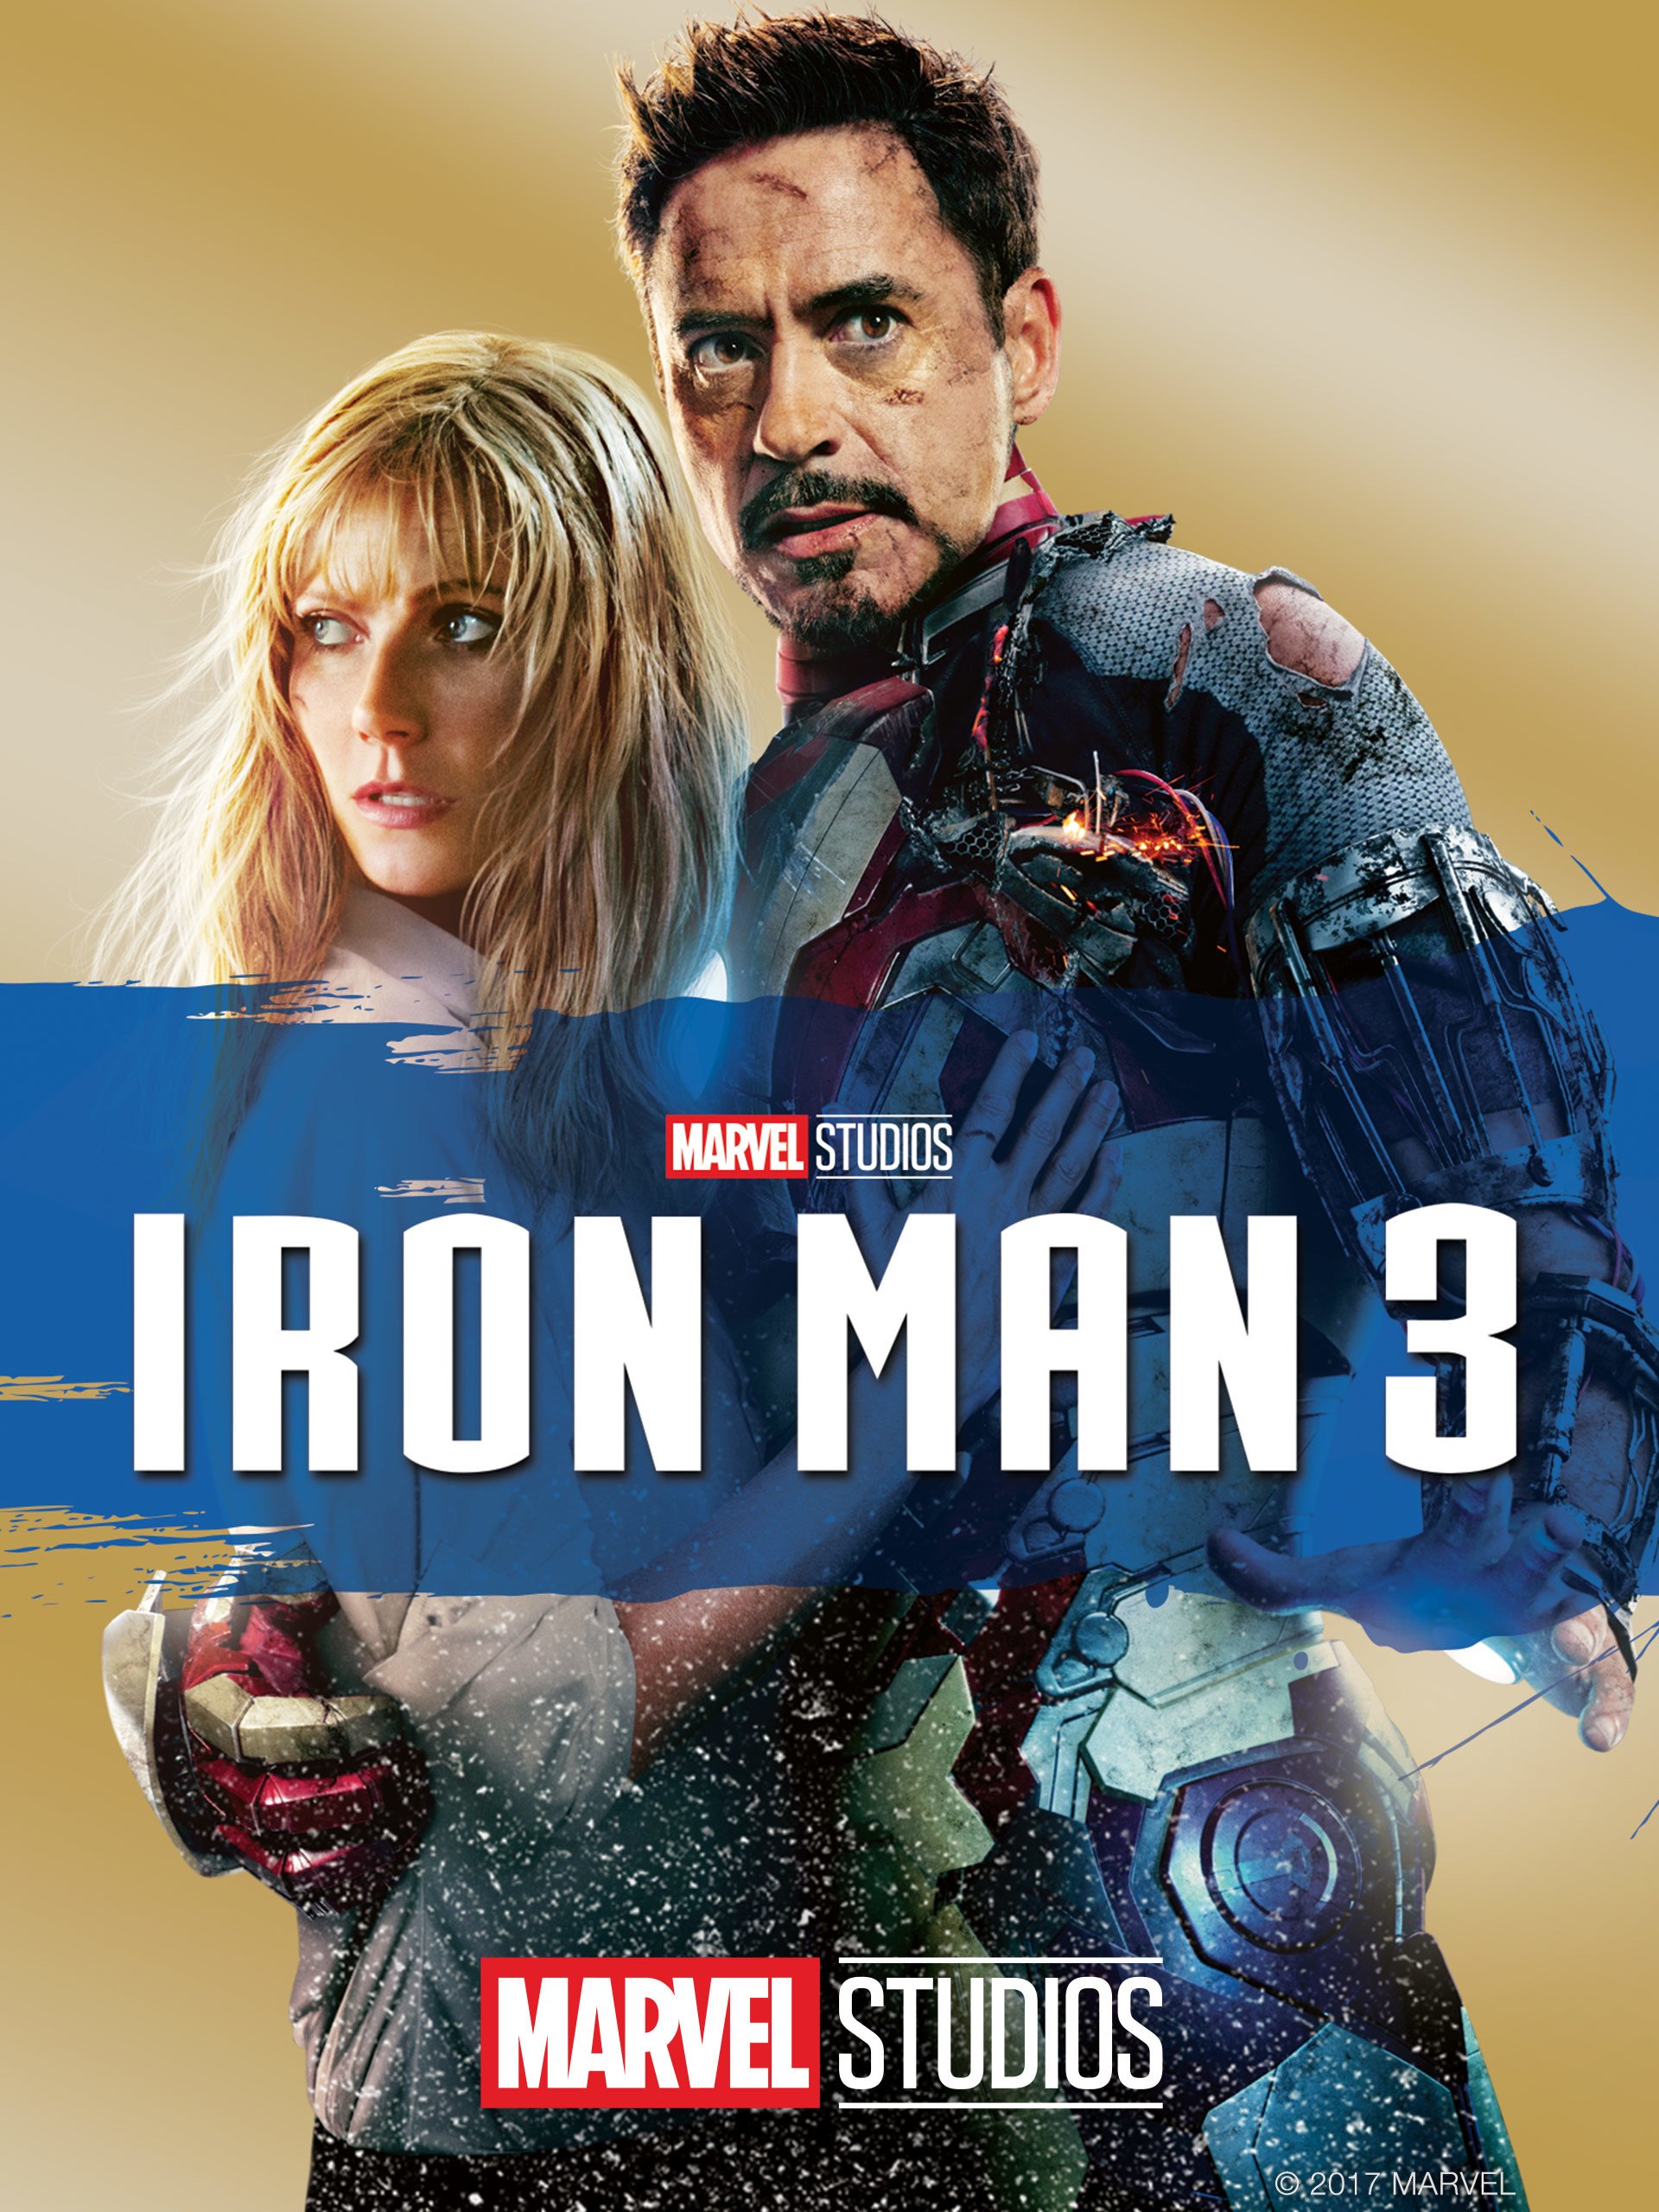 Iron Man 3 Blue Ray Poster.jpg